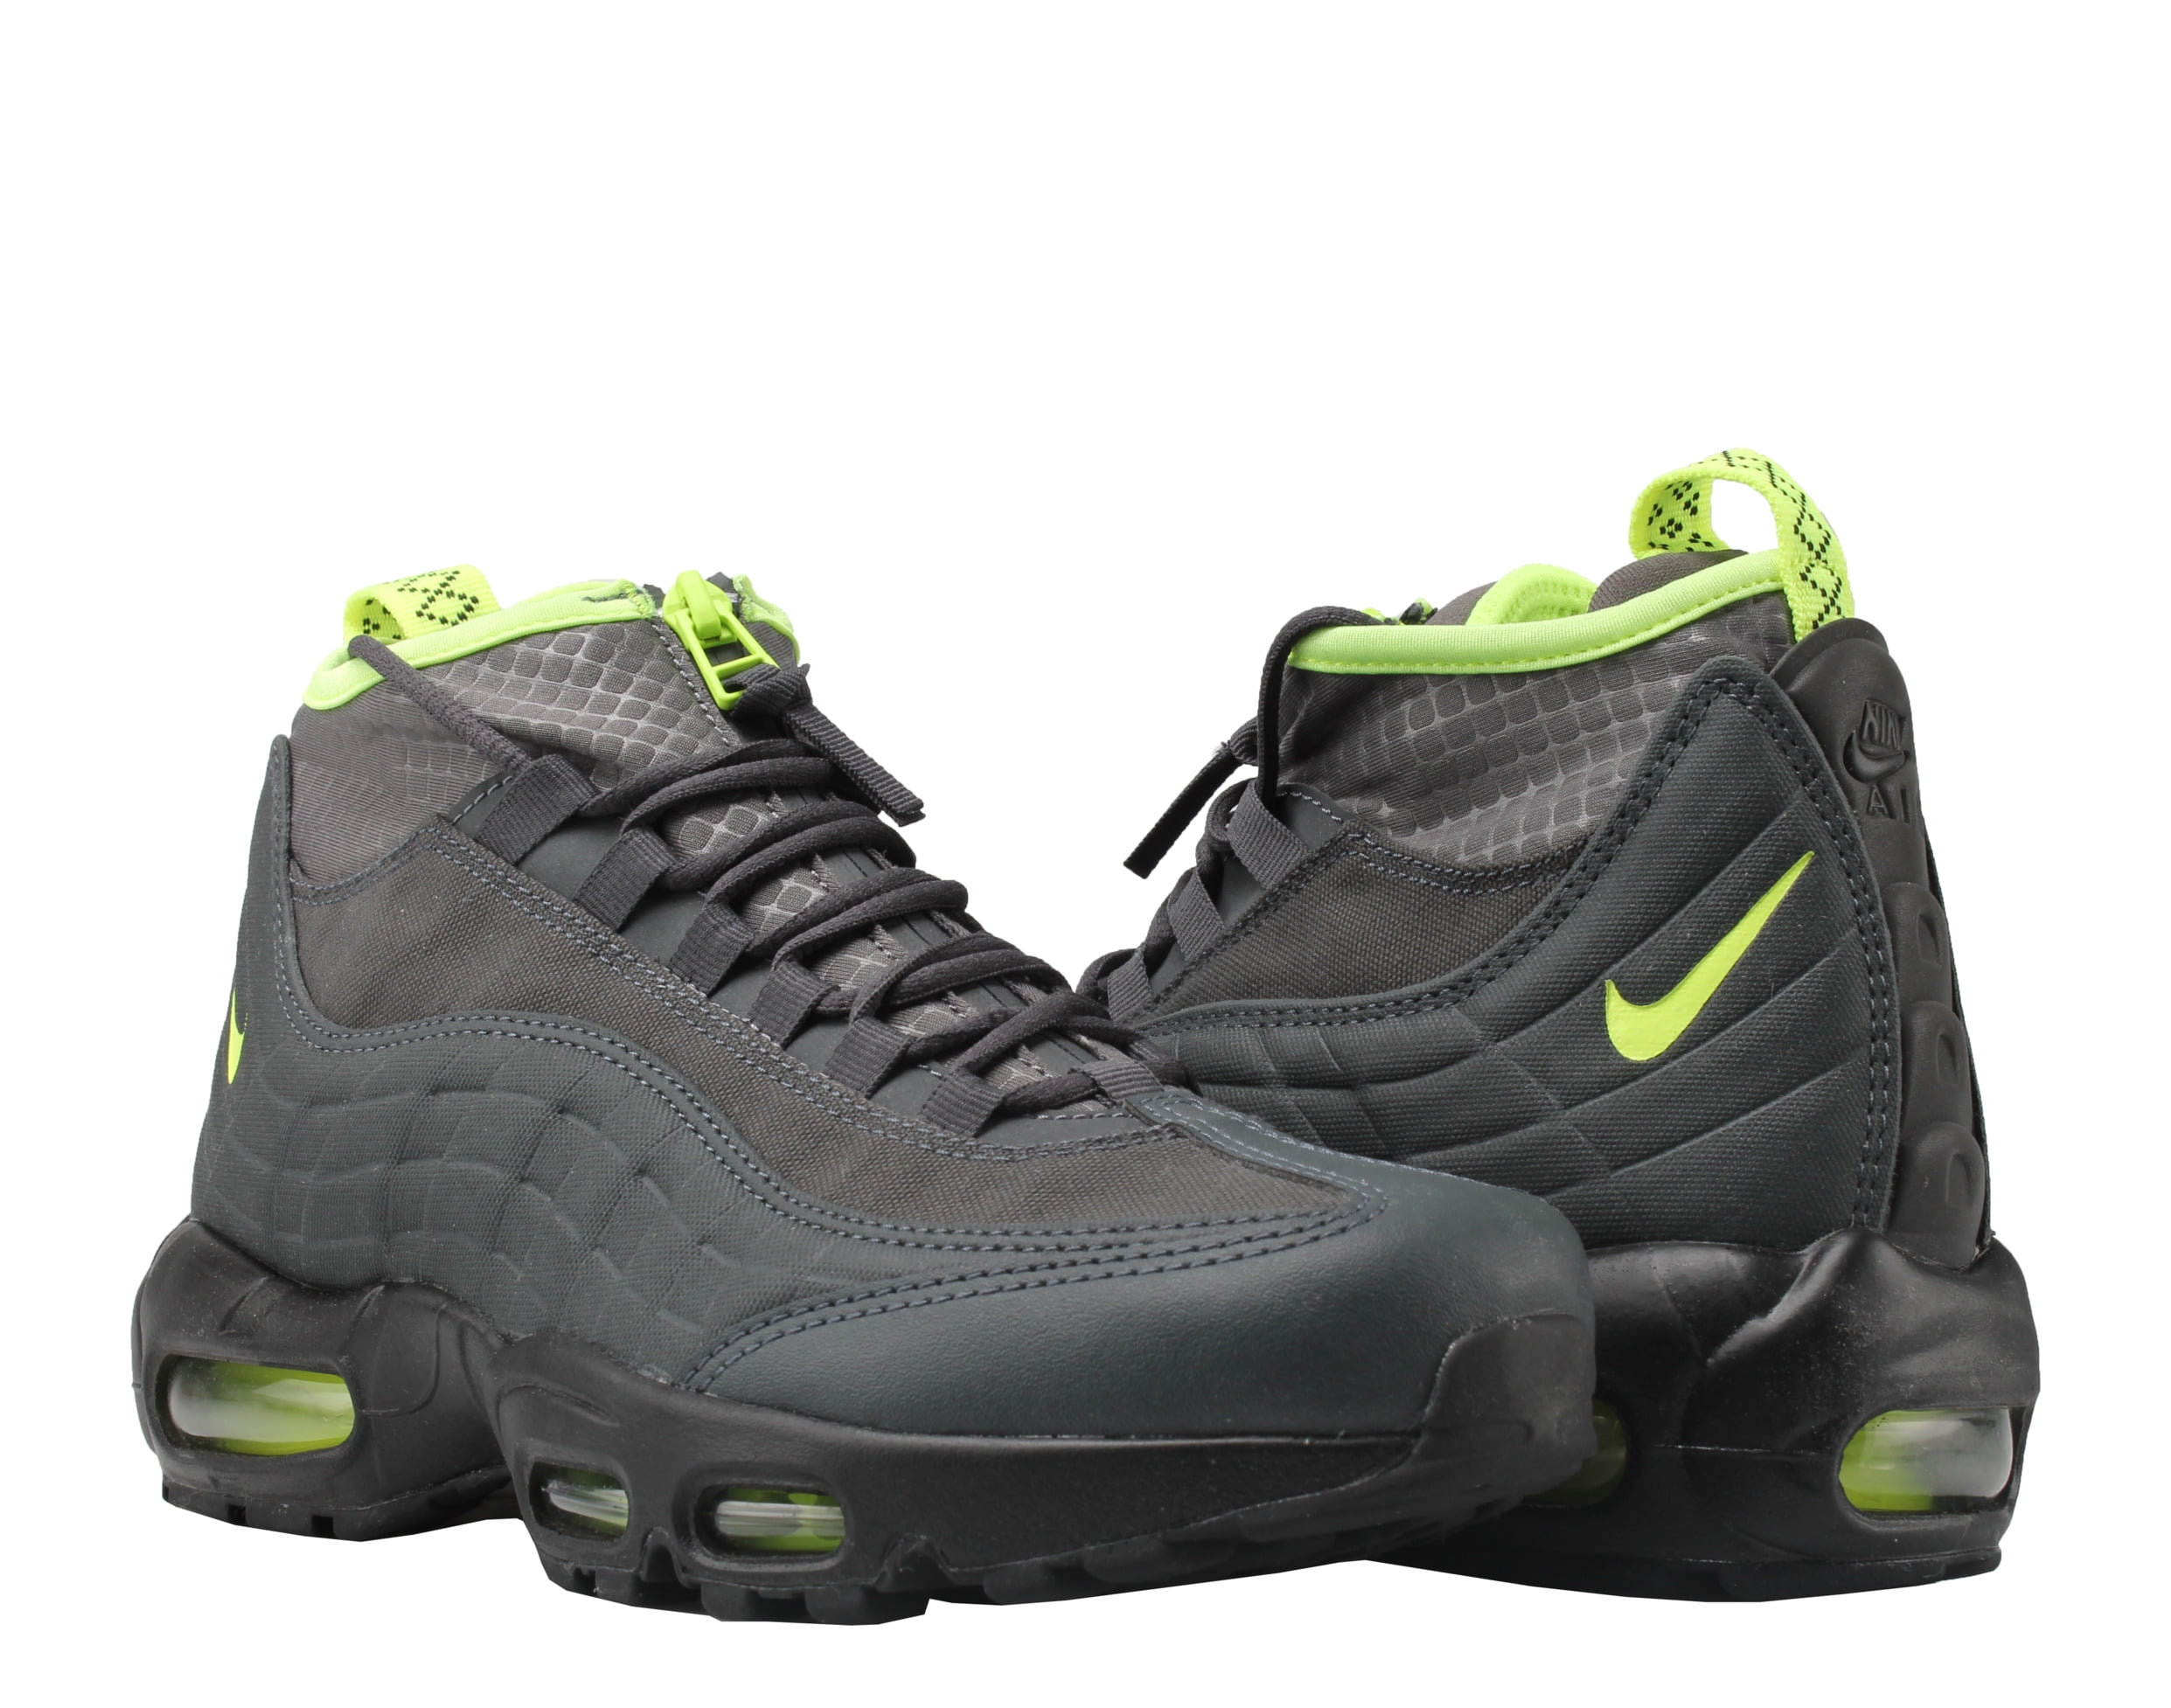 Vooruitzien petticoat pion Nike Air Max 95 SneakerBoot Men's Shoes Size 7.5 - Walmart.com